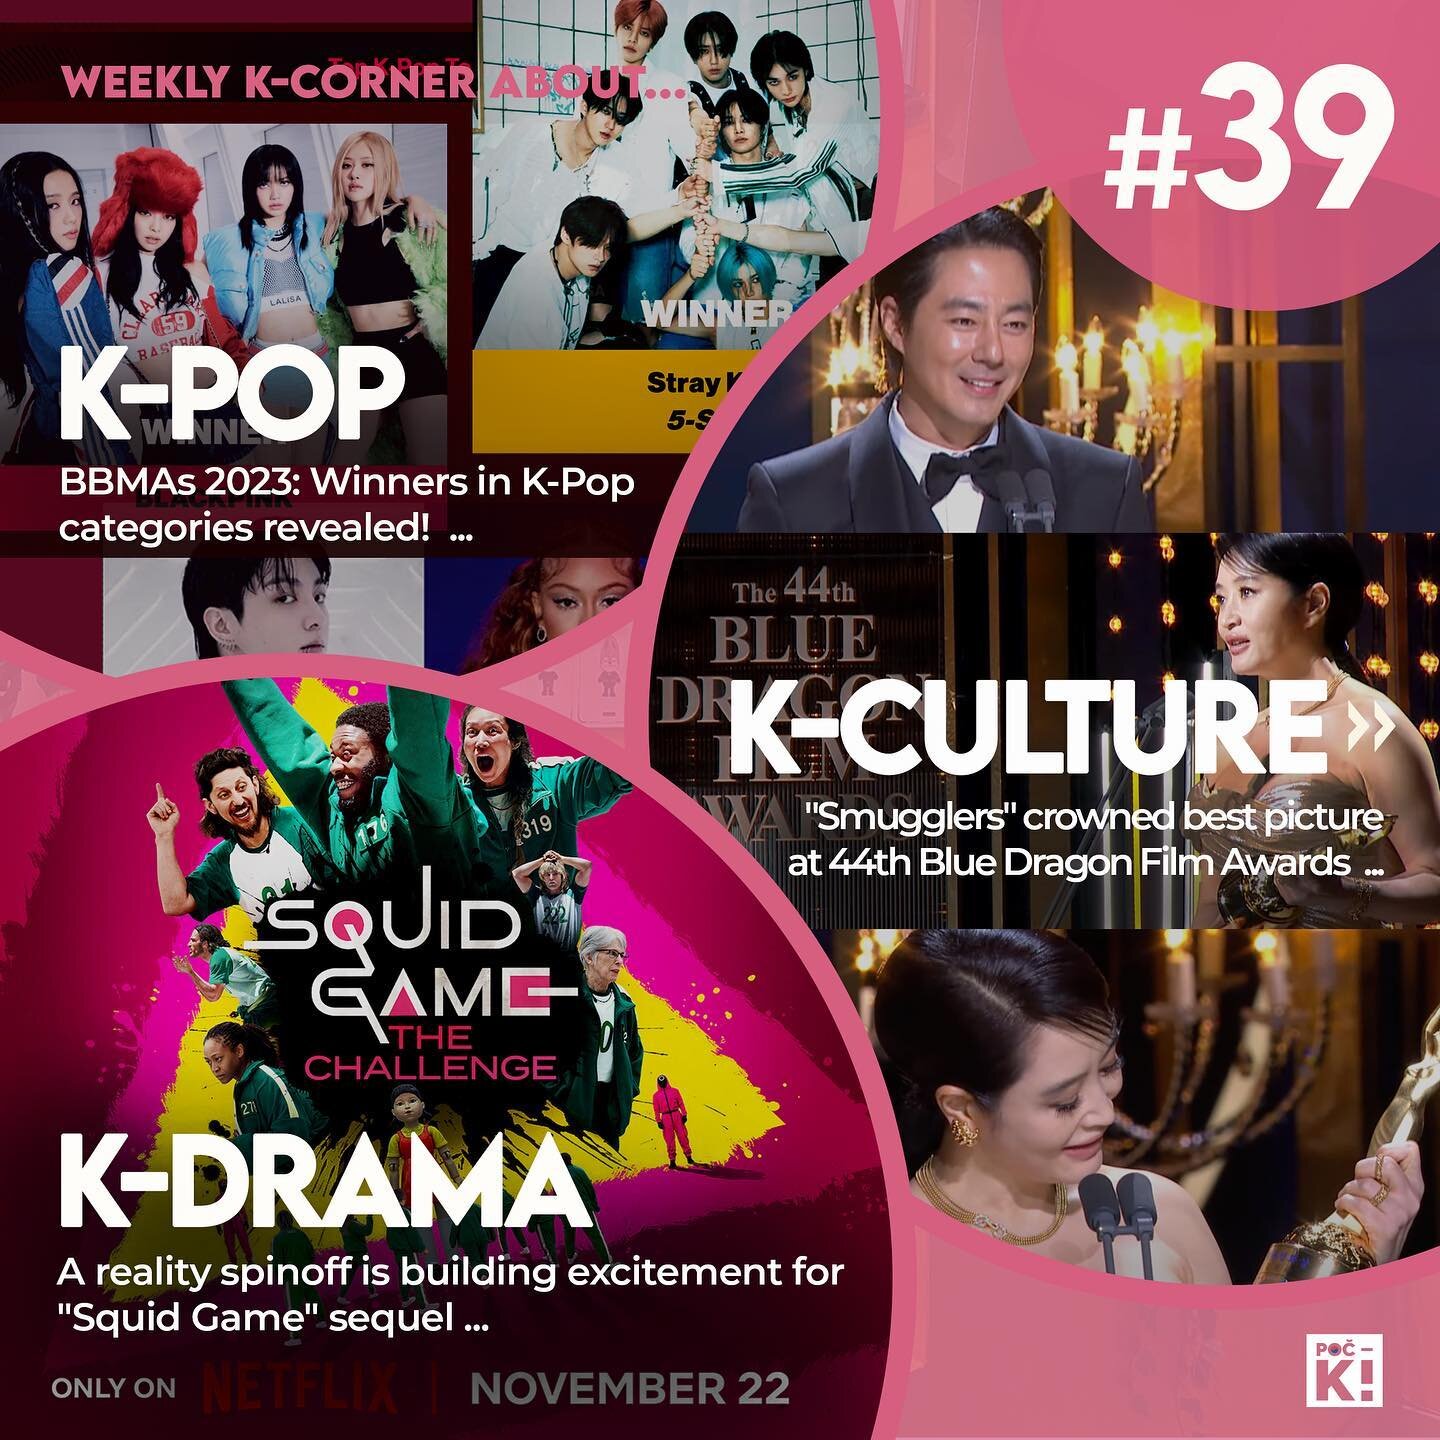 Your weekly dose of K-news is here!~ 💛💛💛

#prague #praha #korean #kpop #kpopcz #straykids #skz #5star #blackpink #newjeans #jungkook #bts #seven #smugglers #kimhyesoo #joinsung #bluedragonfilmawards #squidgame #squidgamechallenge #kdrama #kpopnews